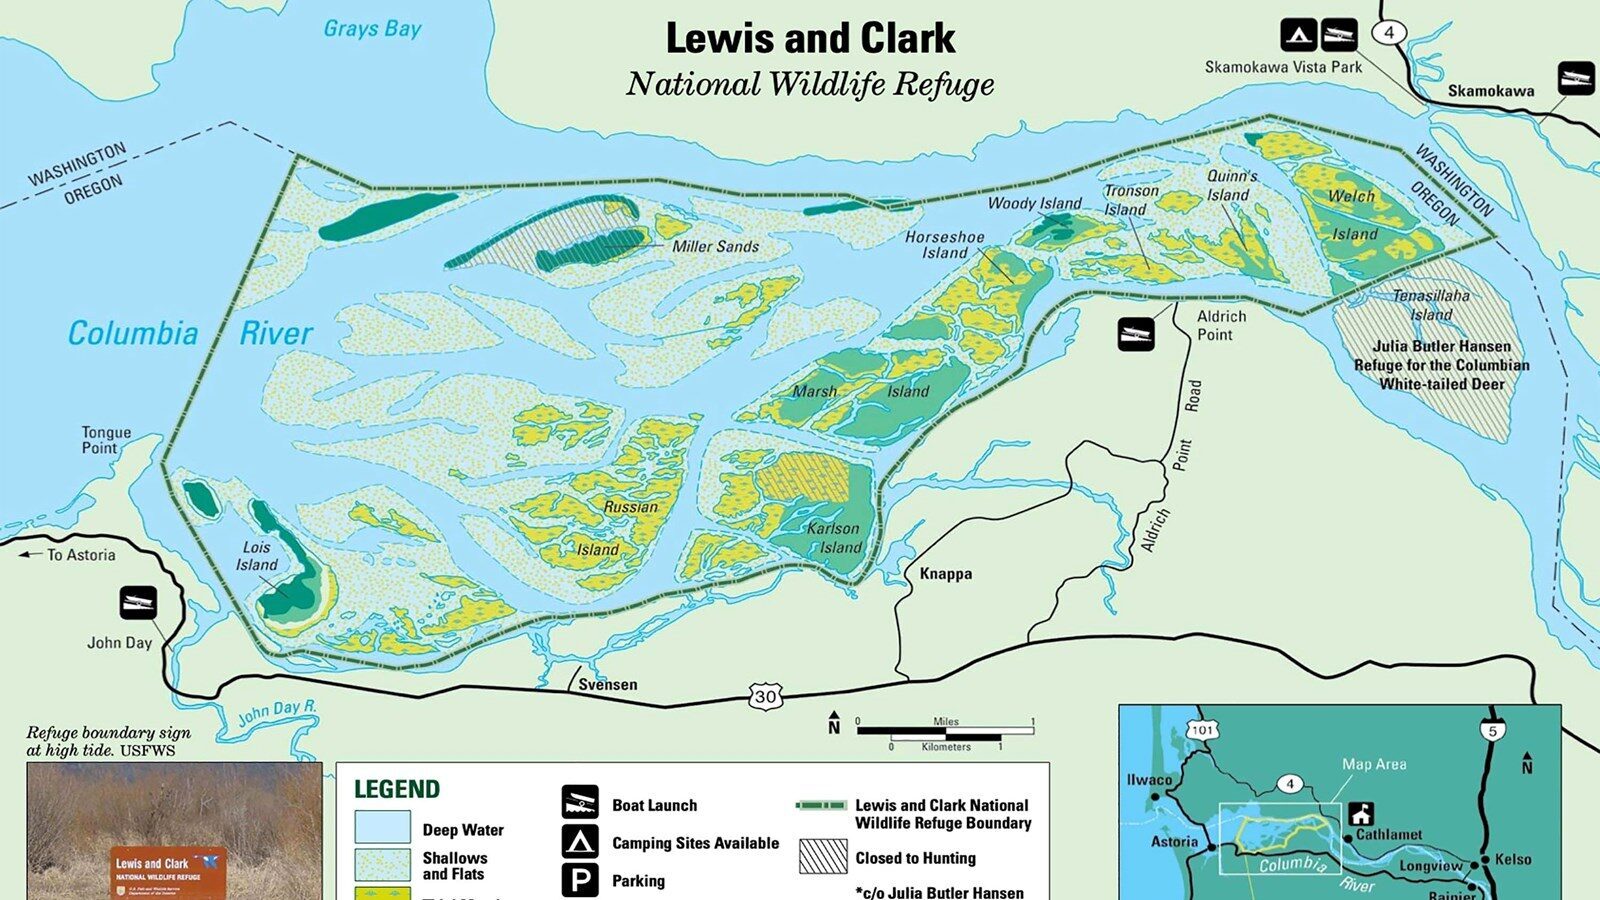 Lewis and Clark National Wildlife Refuge